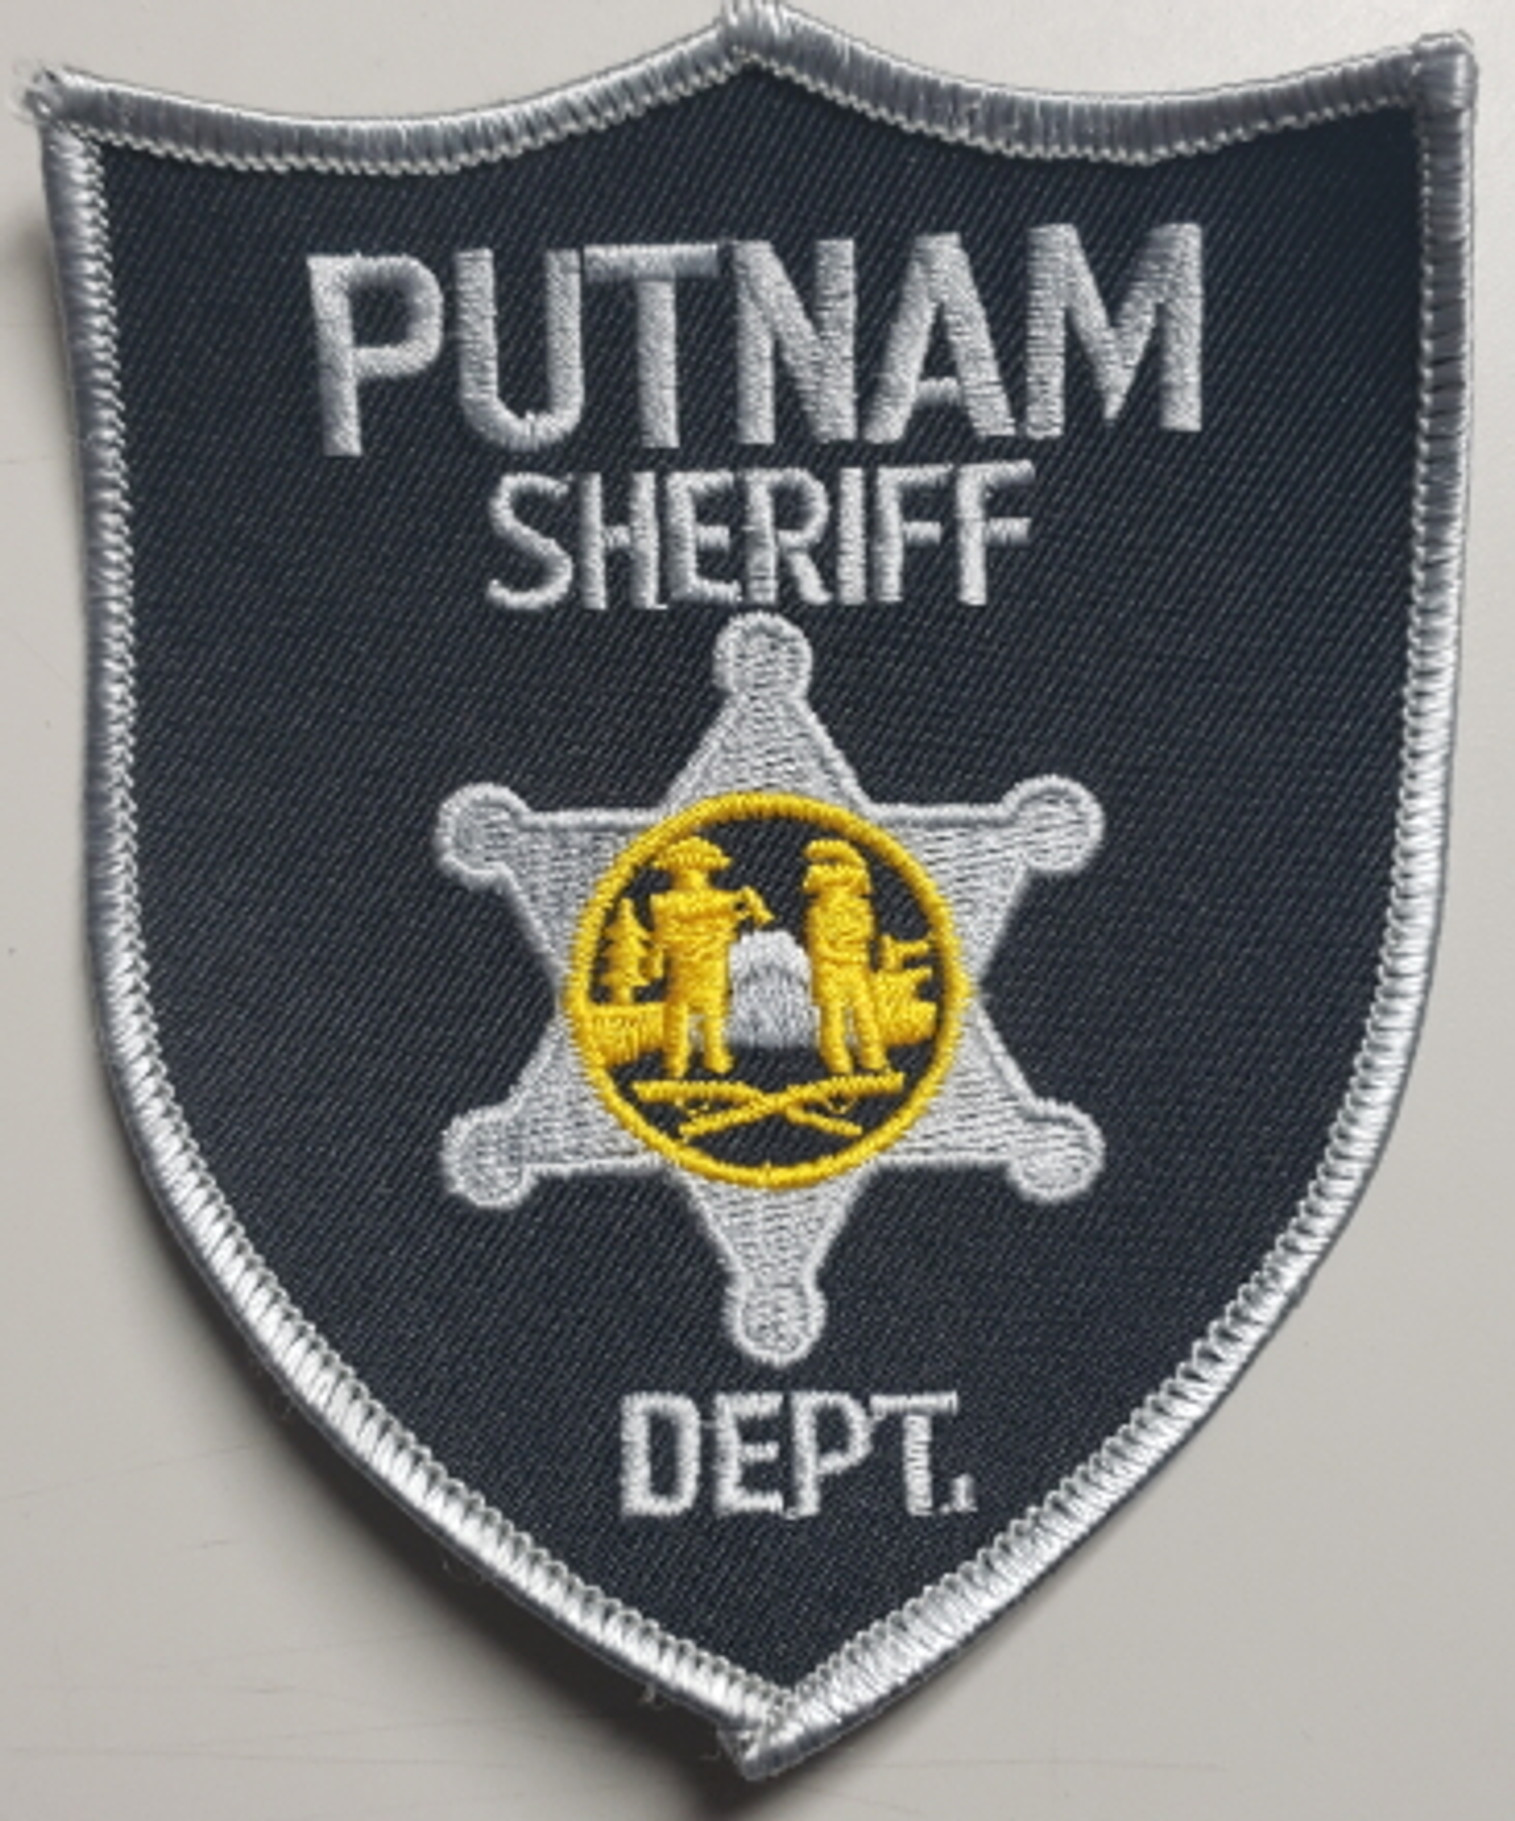 Putnam Sheriff Dept WV Police Patch - SILVER